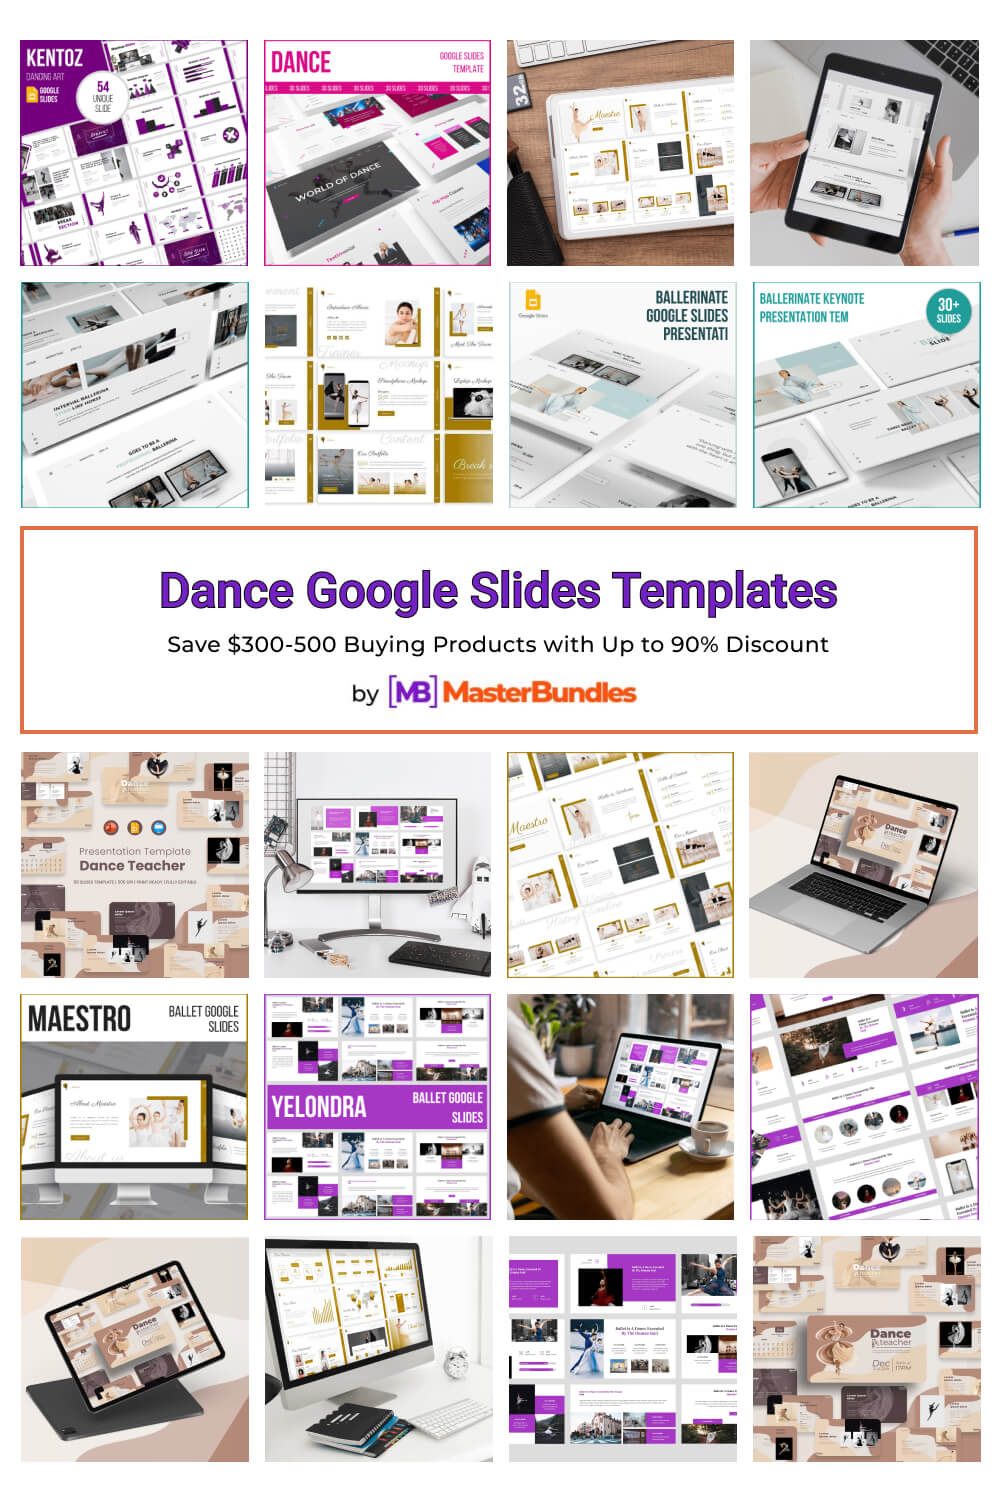 dance google slides templates pinterest image.